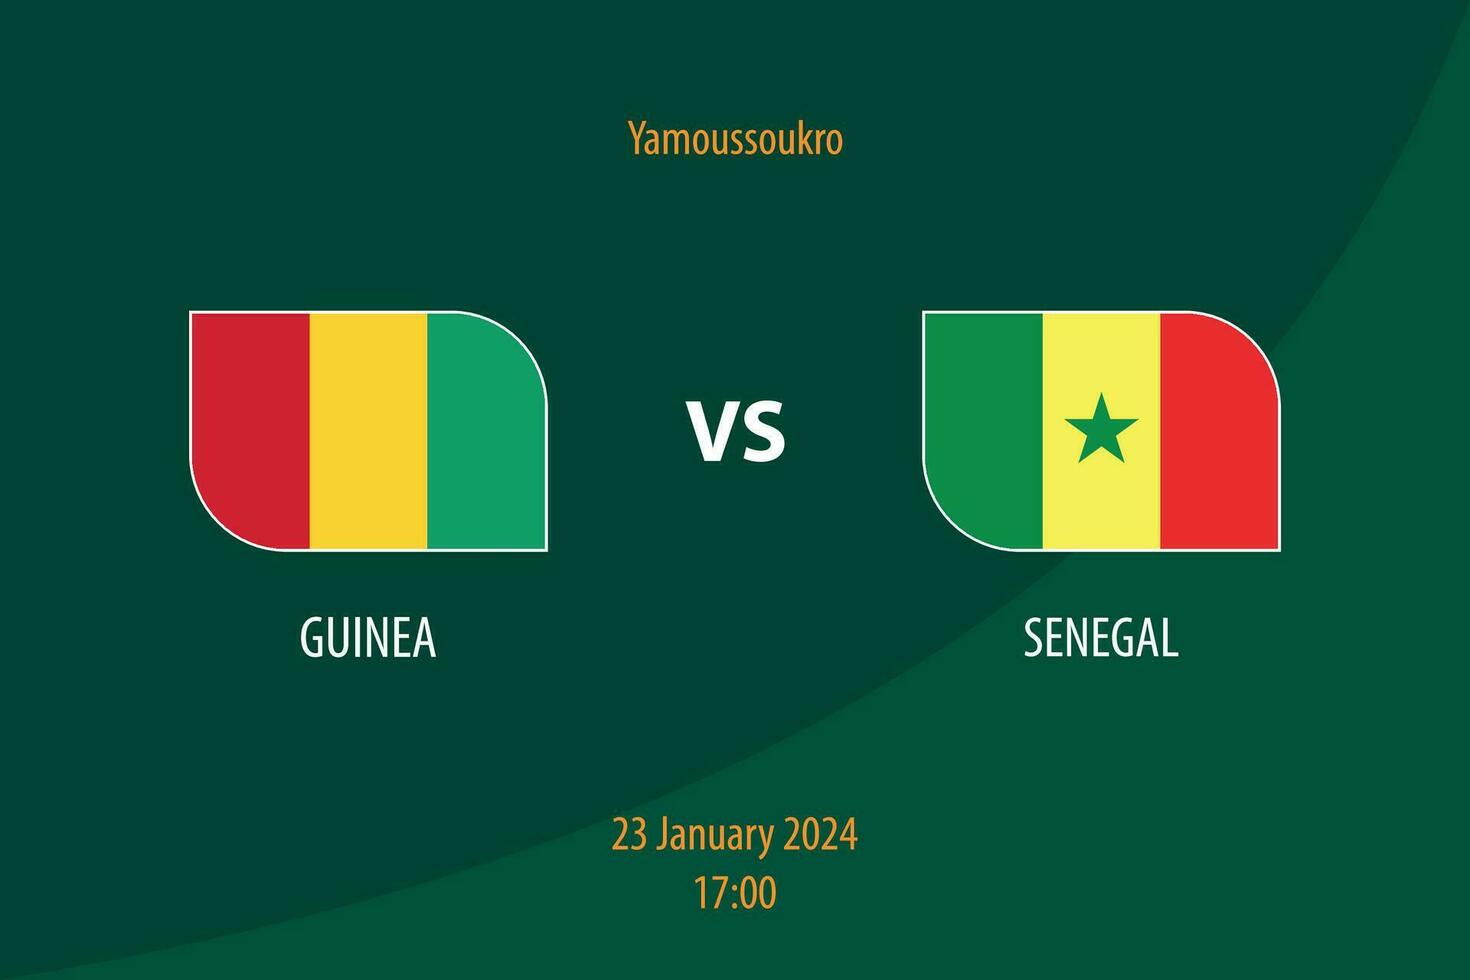 Guinea vs Senegal football scoreboard broadcast template vector